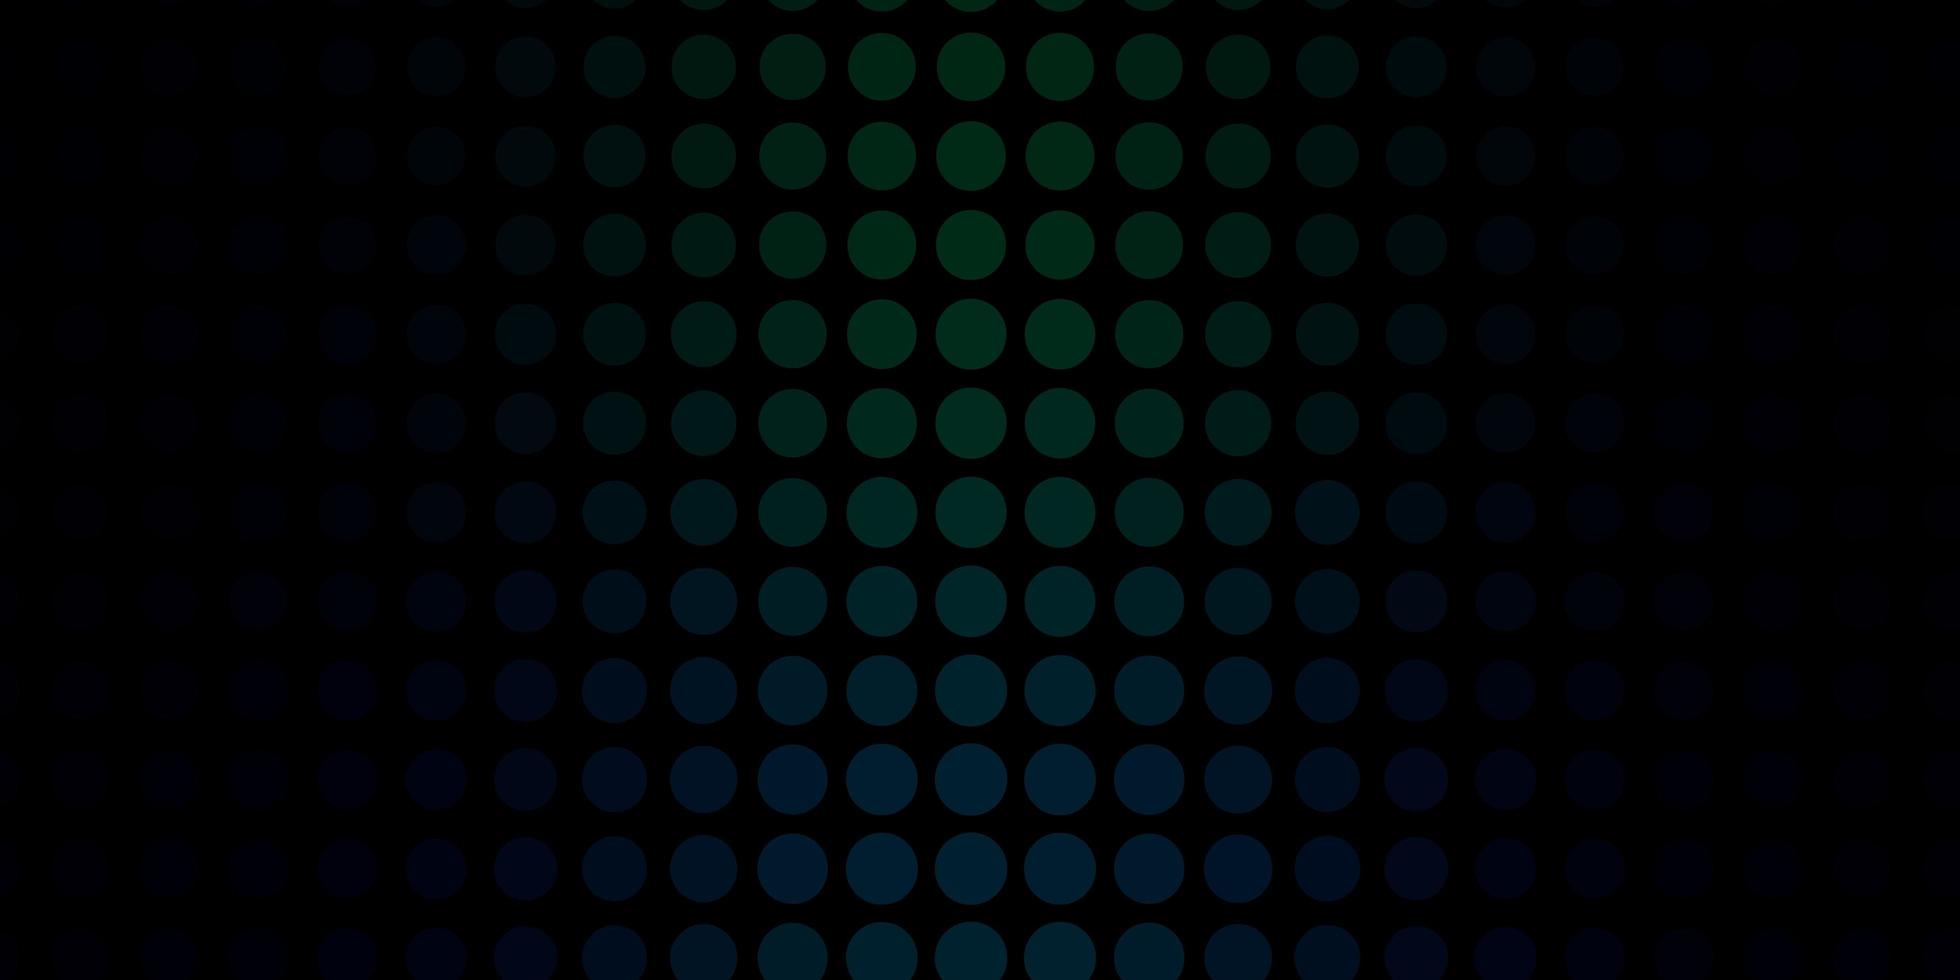 modelo de vetor azul e verde escuro com círculos.